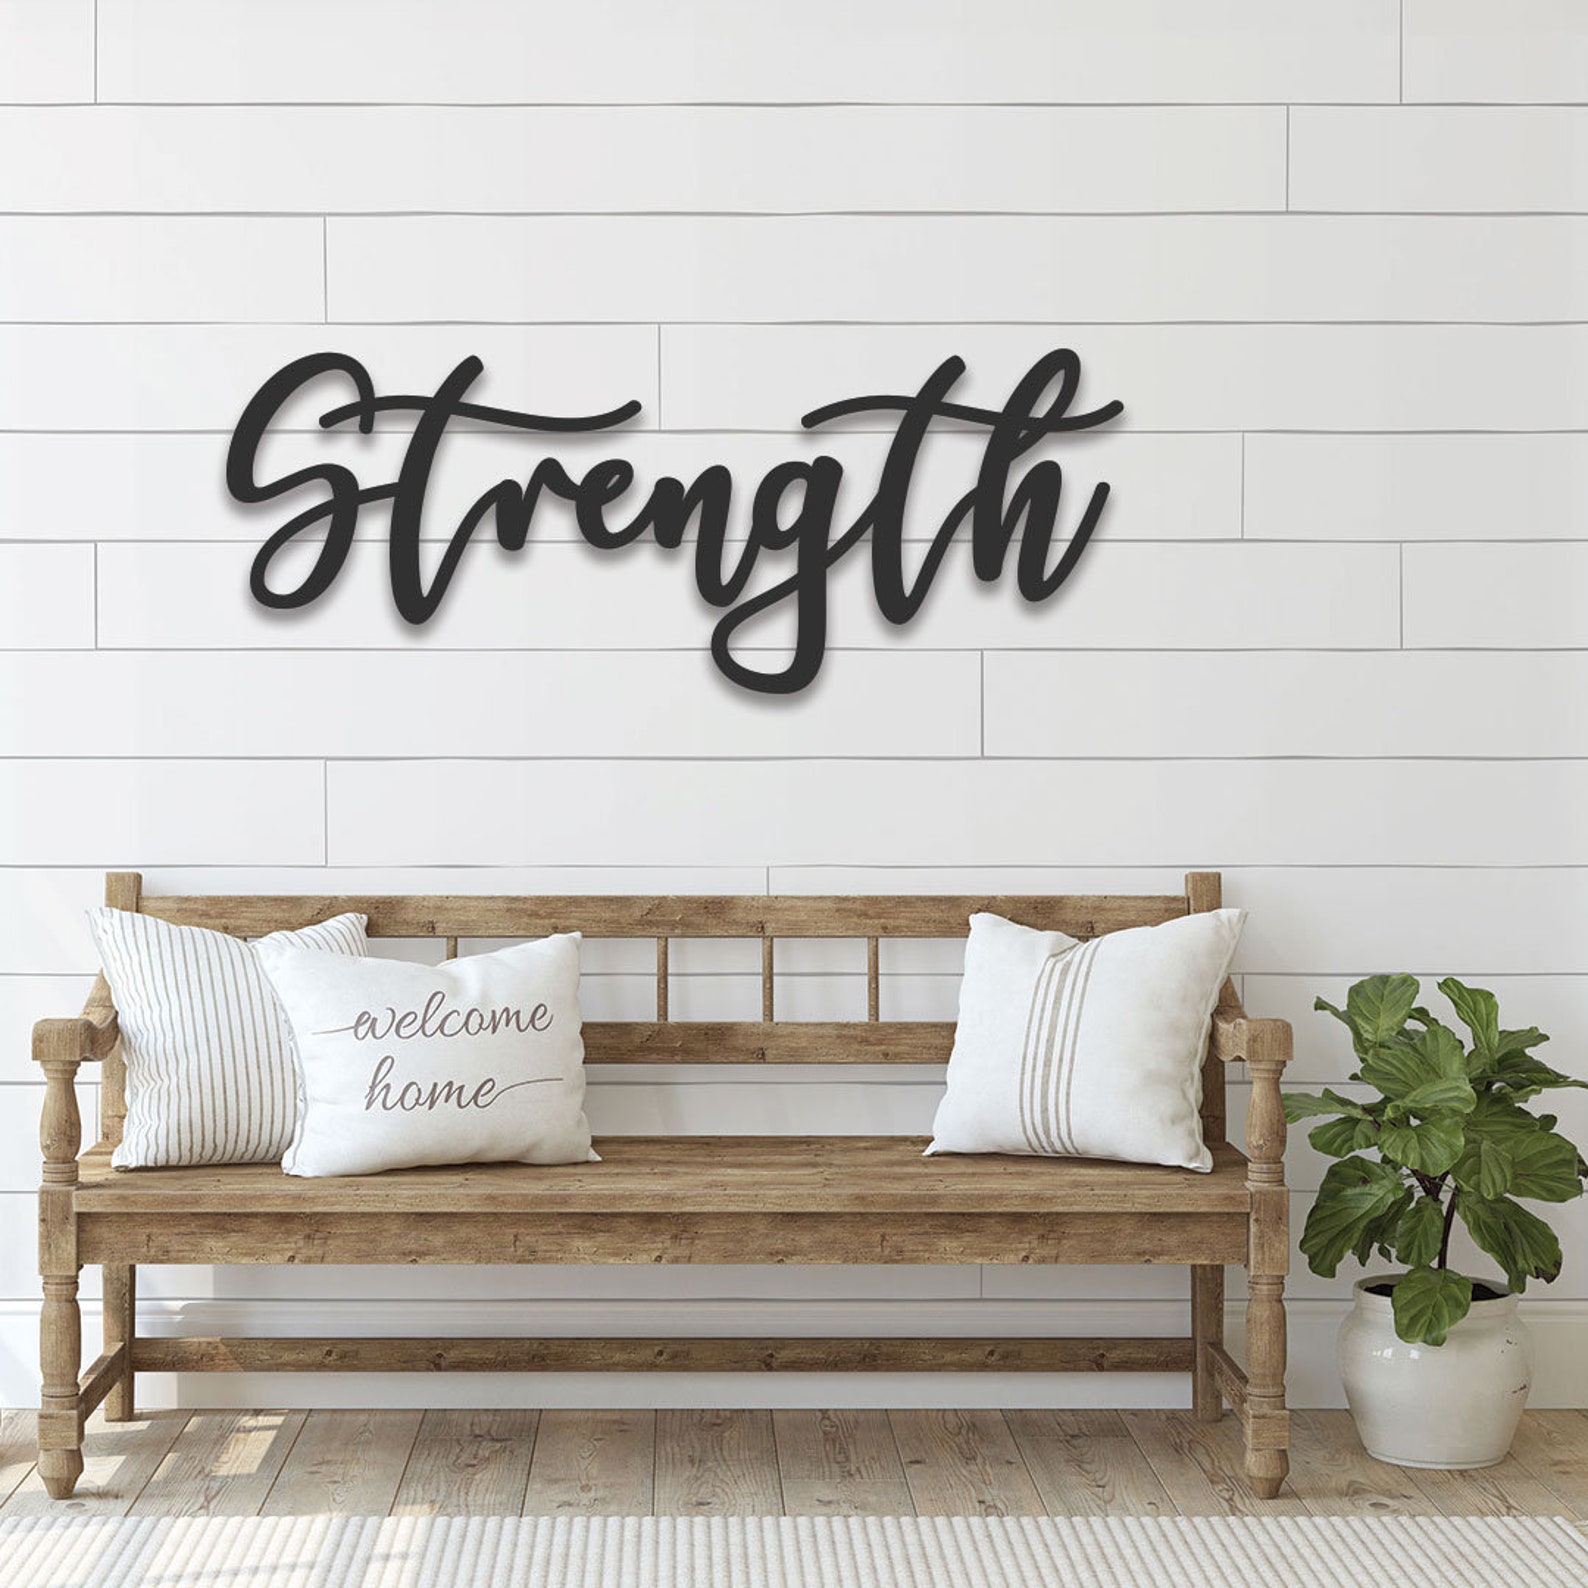 strength metal wall sign